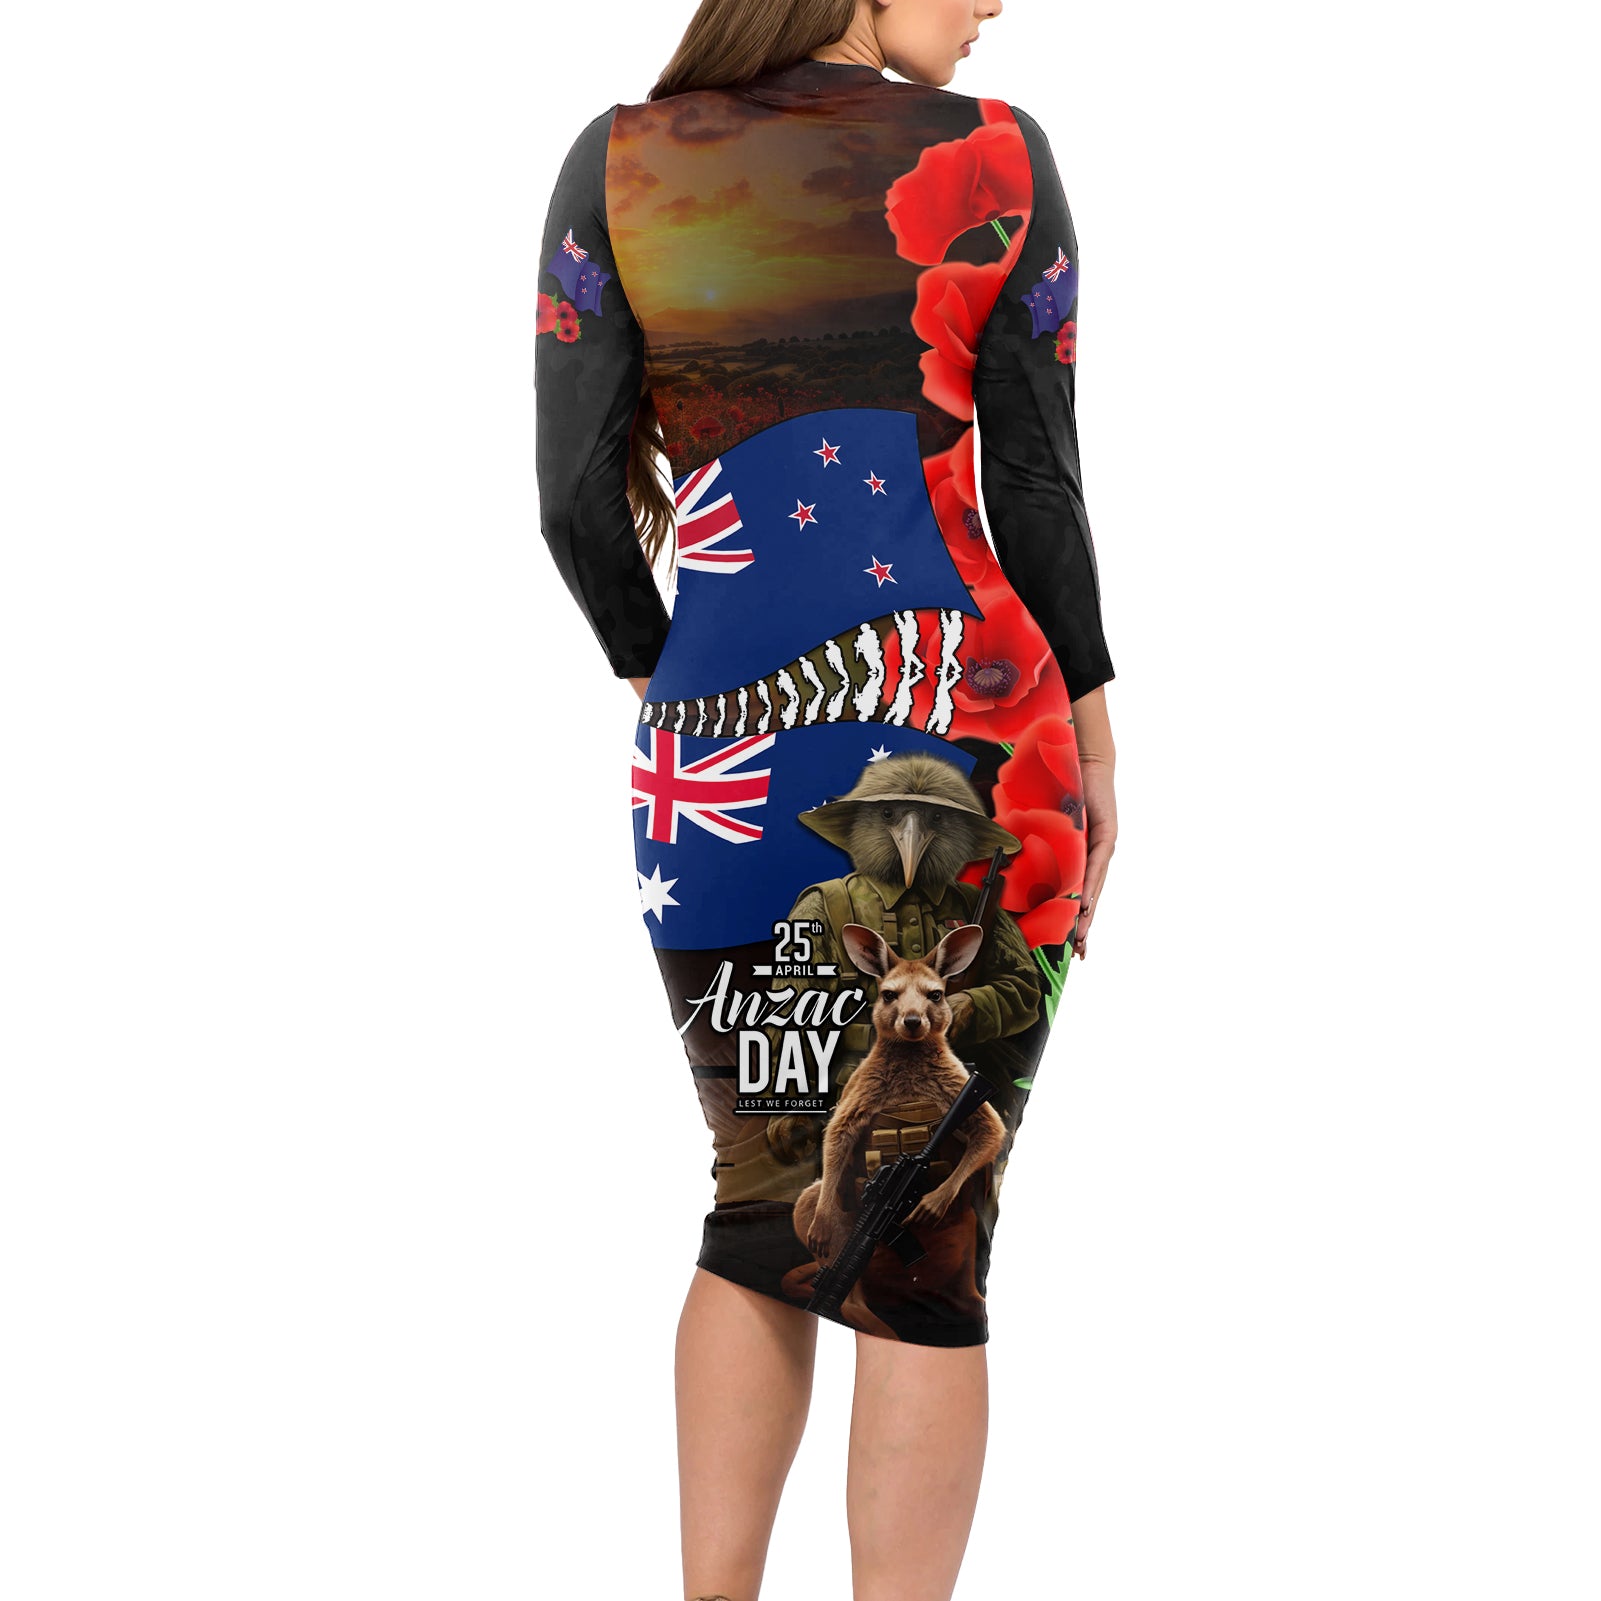 New Zealand and Australia ANZAC Day Long Sleeve Bodycon Dress National Flag mix Kiwi Bird and Kangaroo Soldier Style